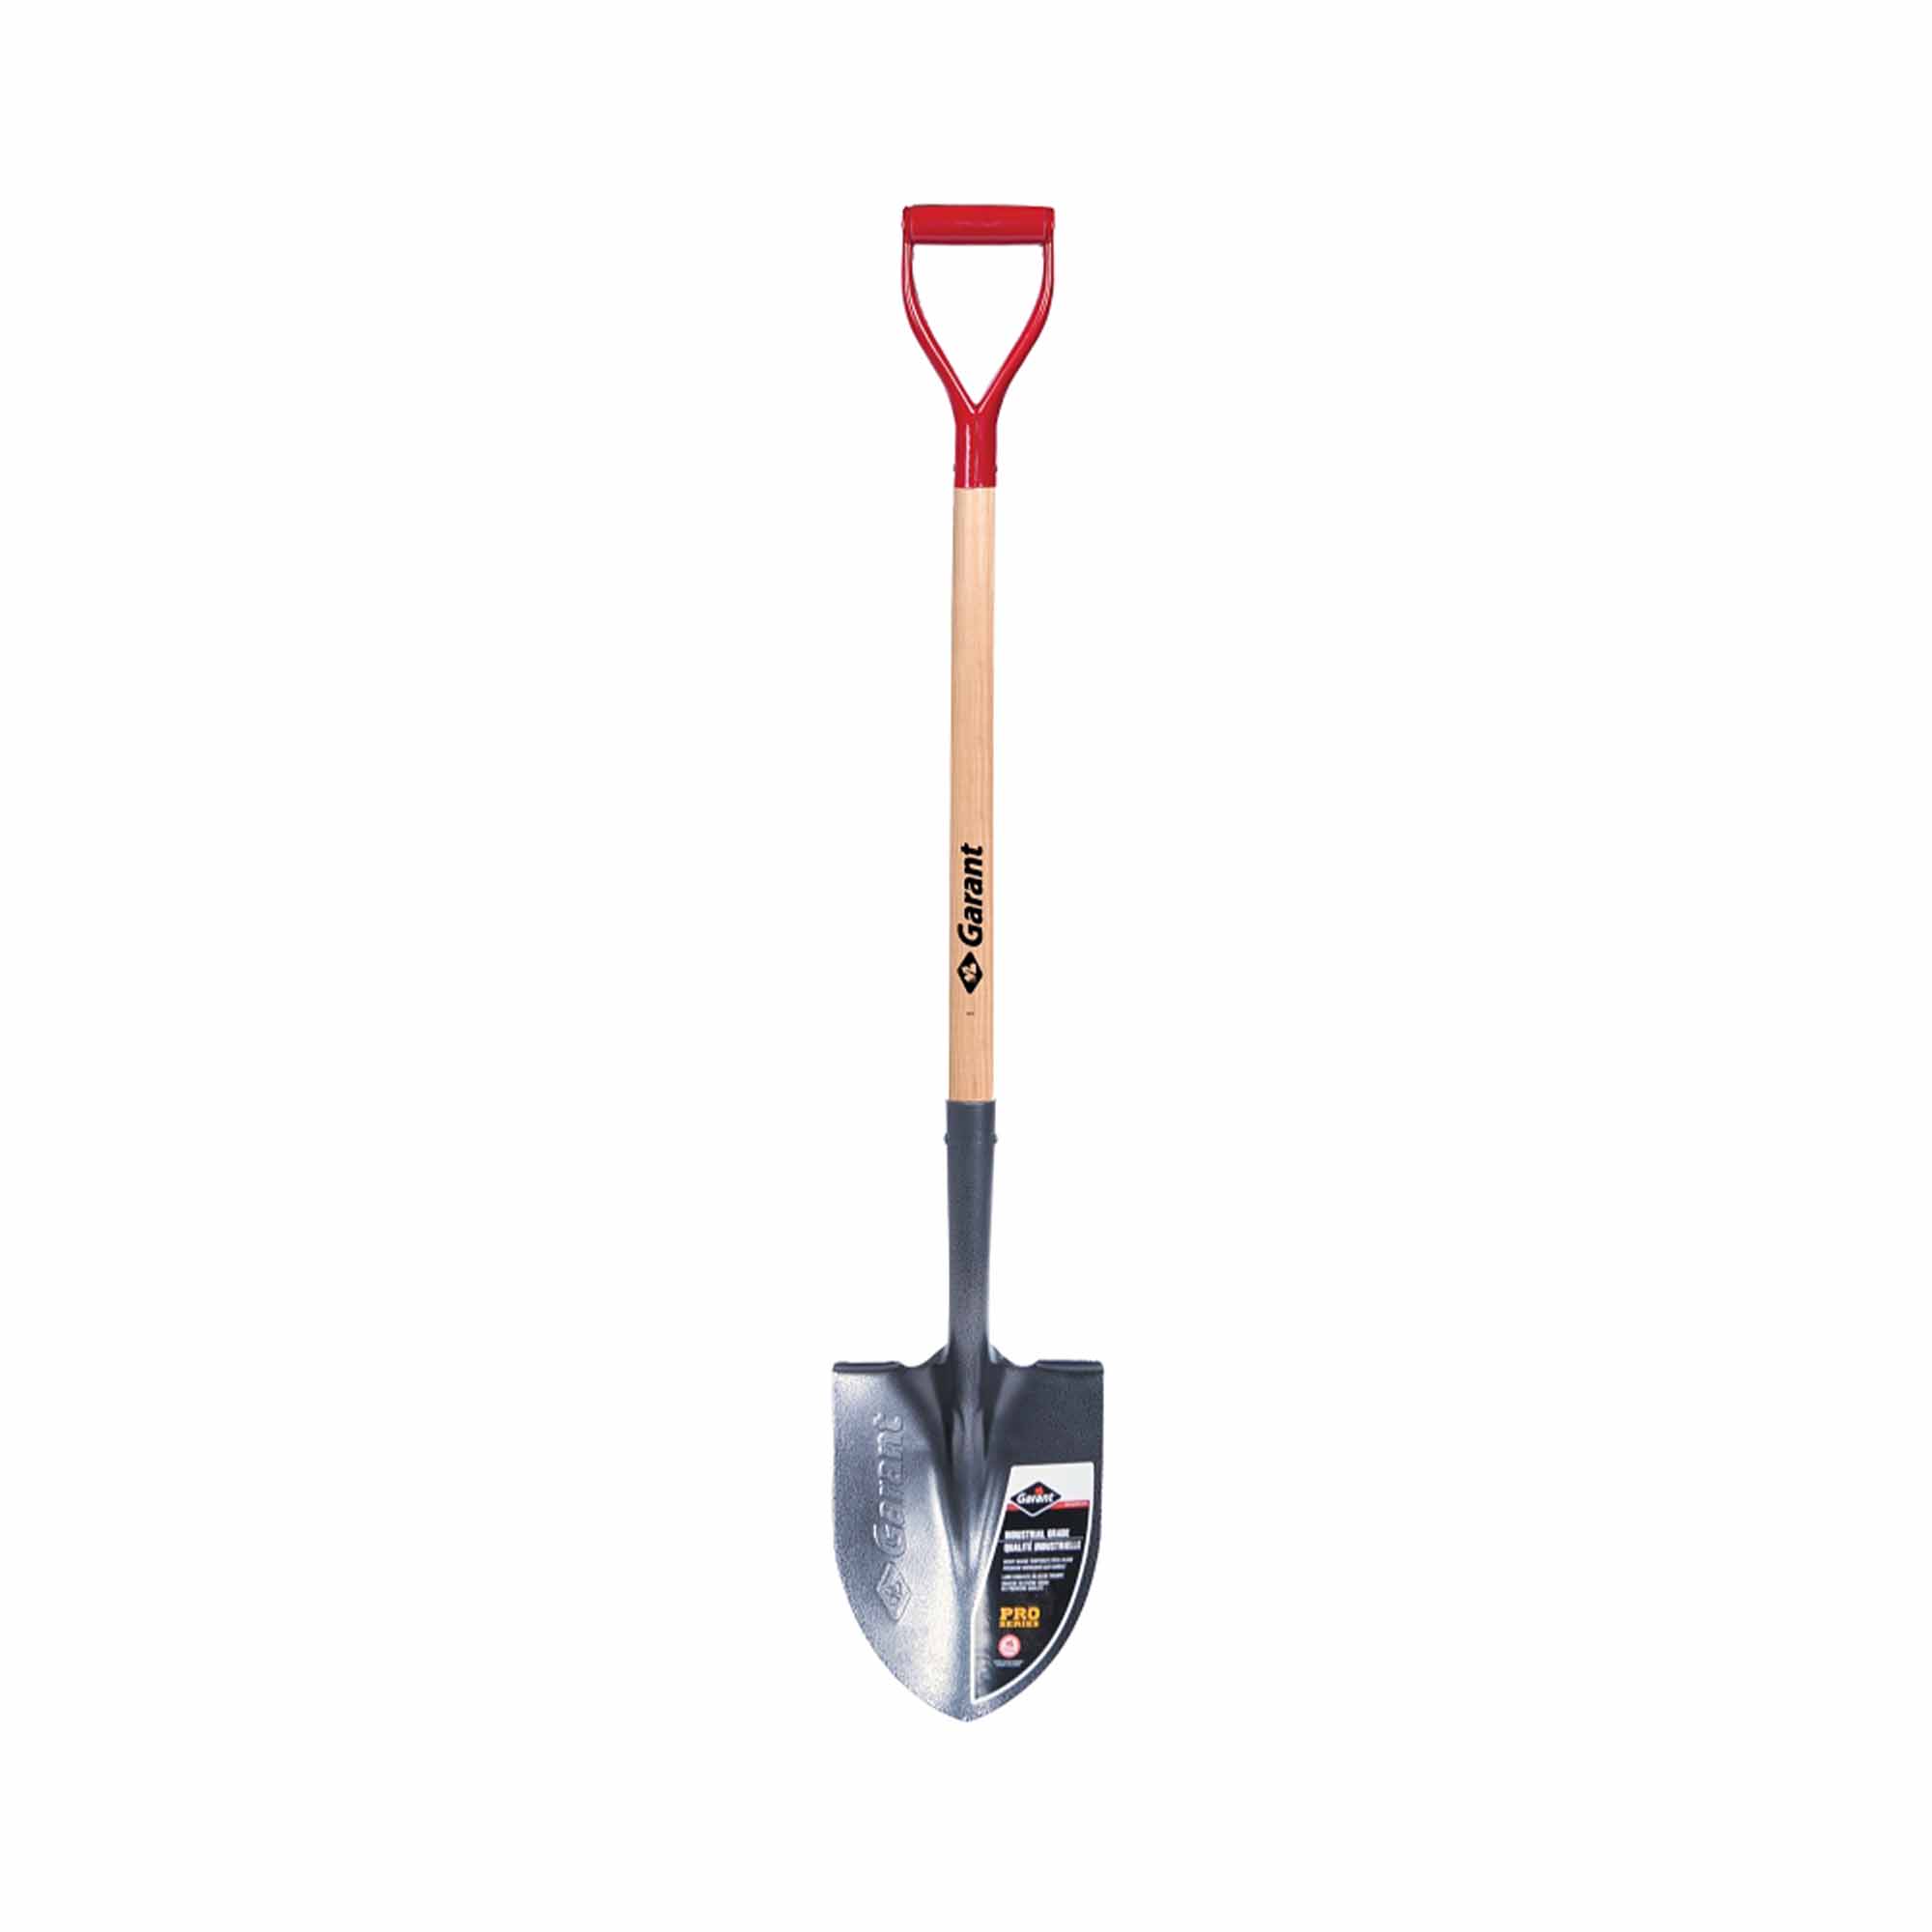 Round tip shovel long handle D - Garant